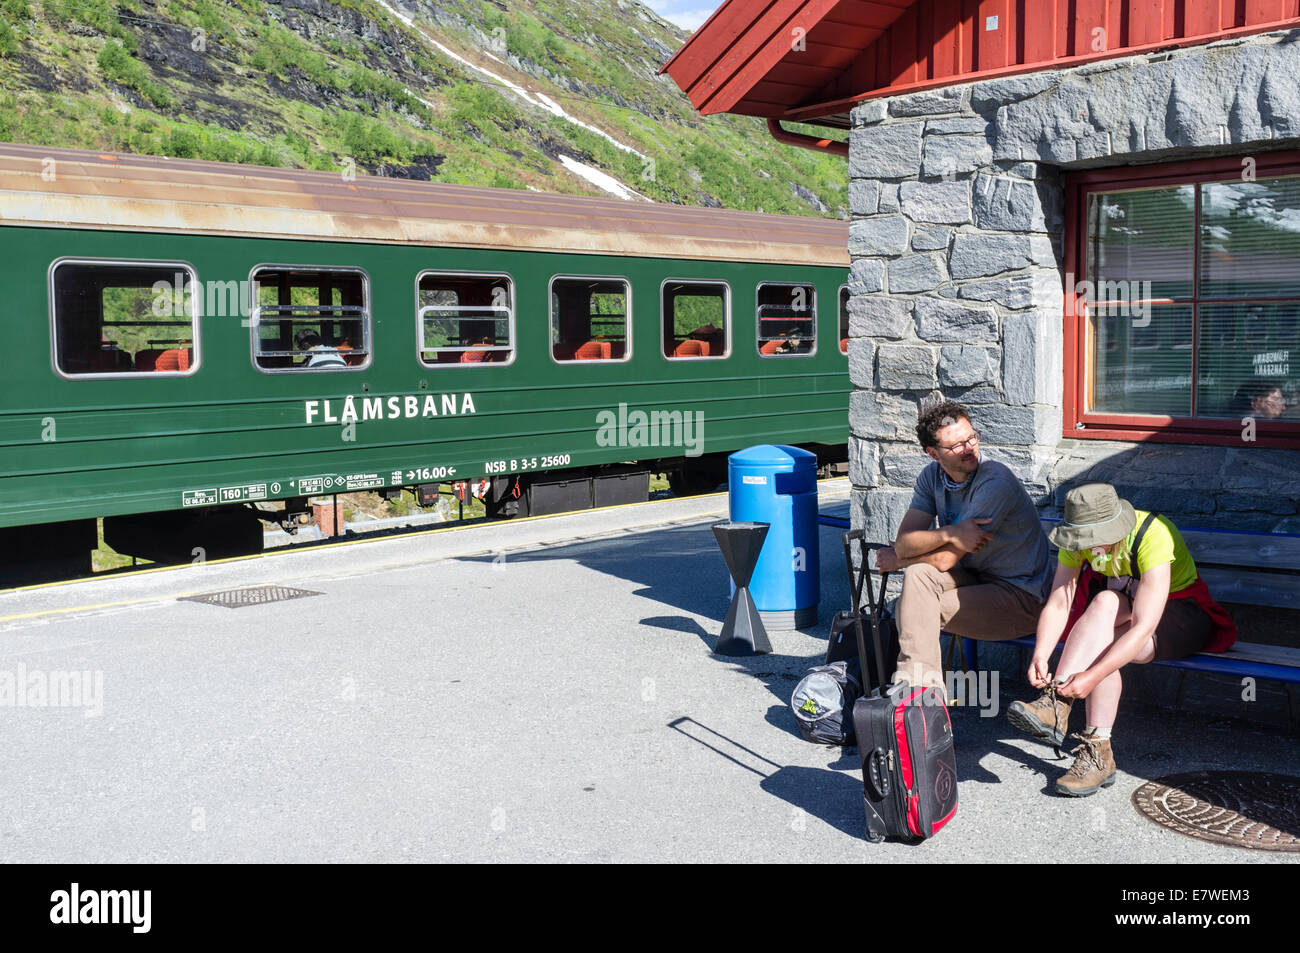 Flamsbana train and passengers at Myrdal train station, Norway Stock Photo